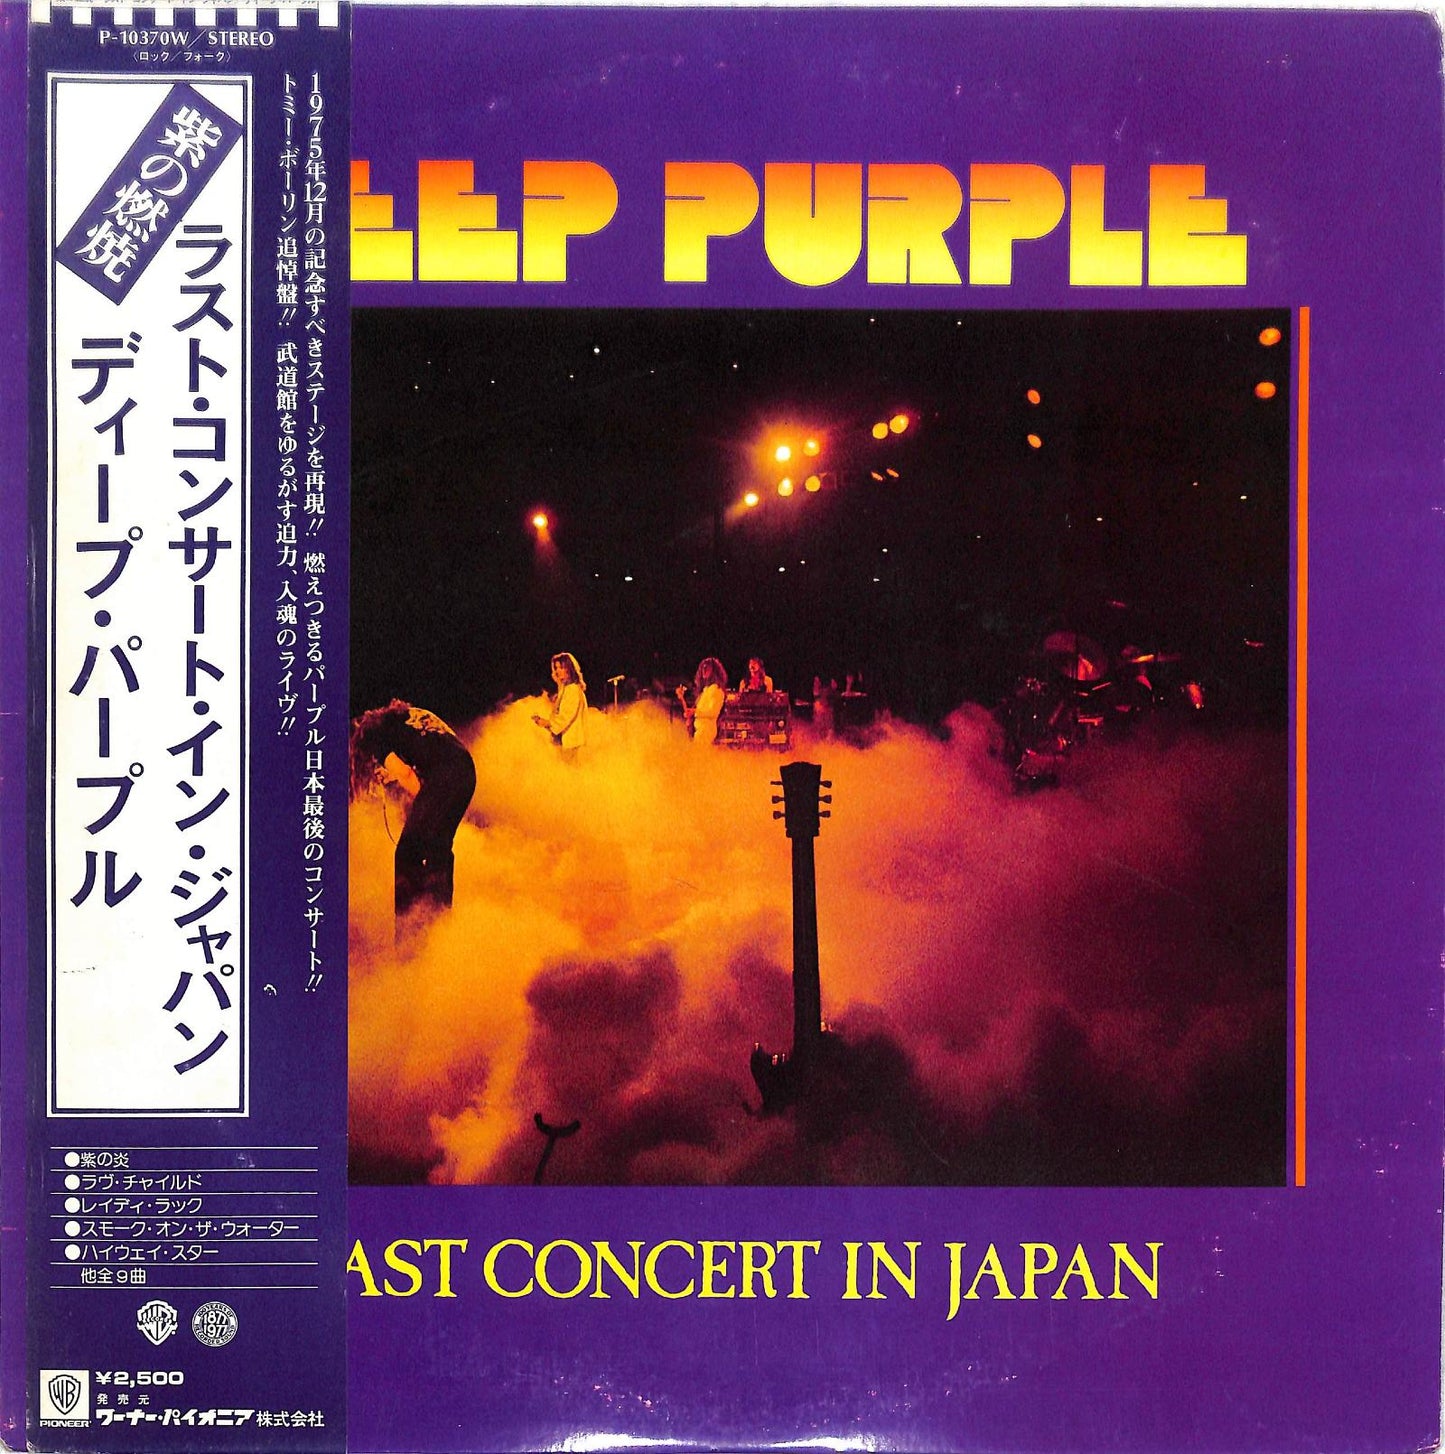 DEEP PURPLE - Last Concert In Japan